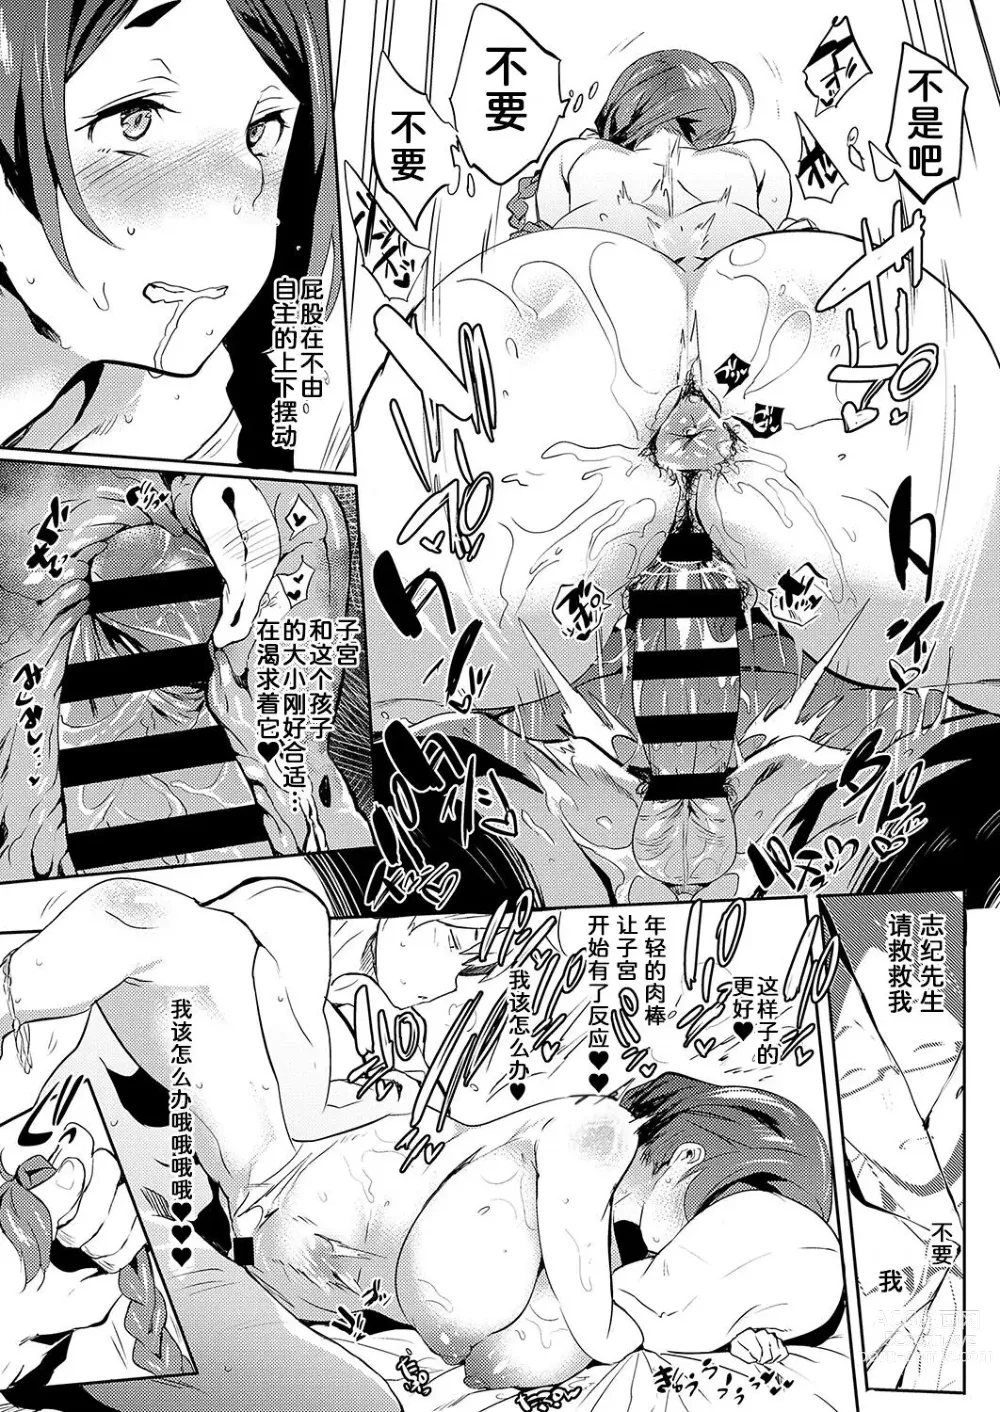 Page 14 of manga Sutsukuri torabera